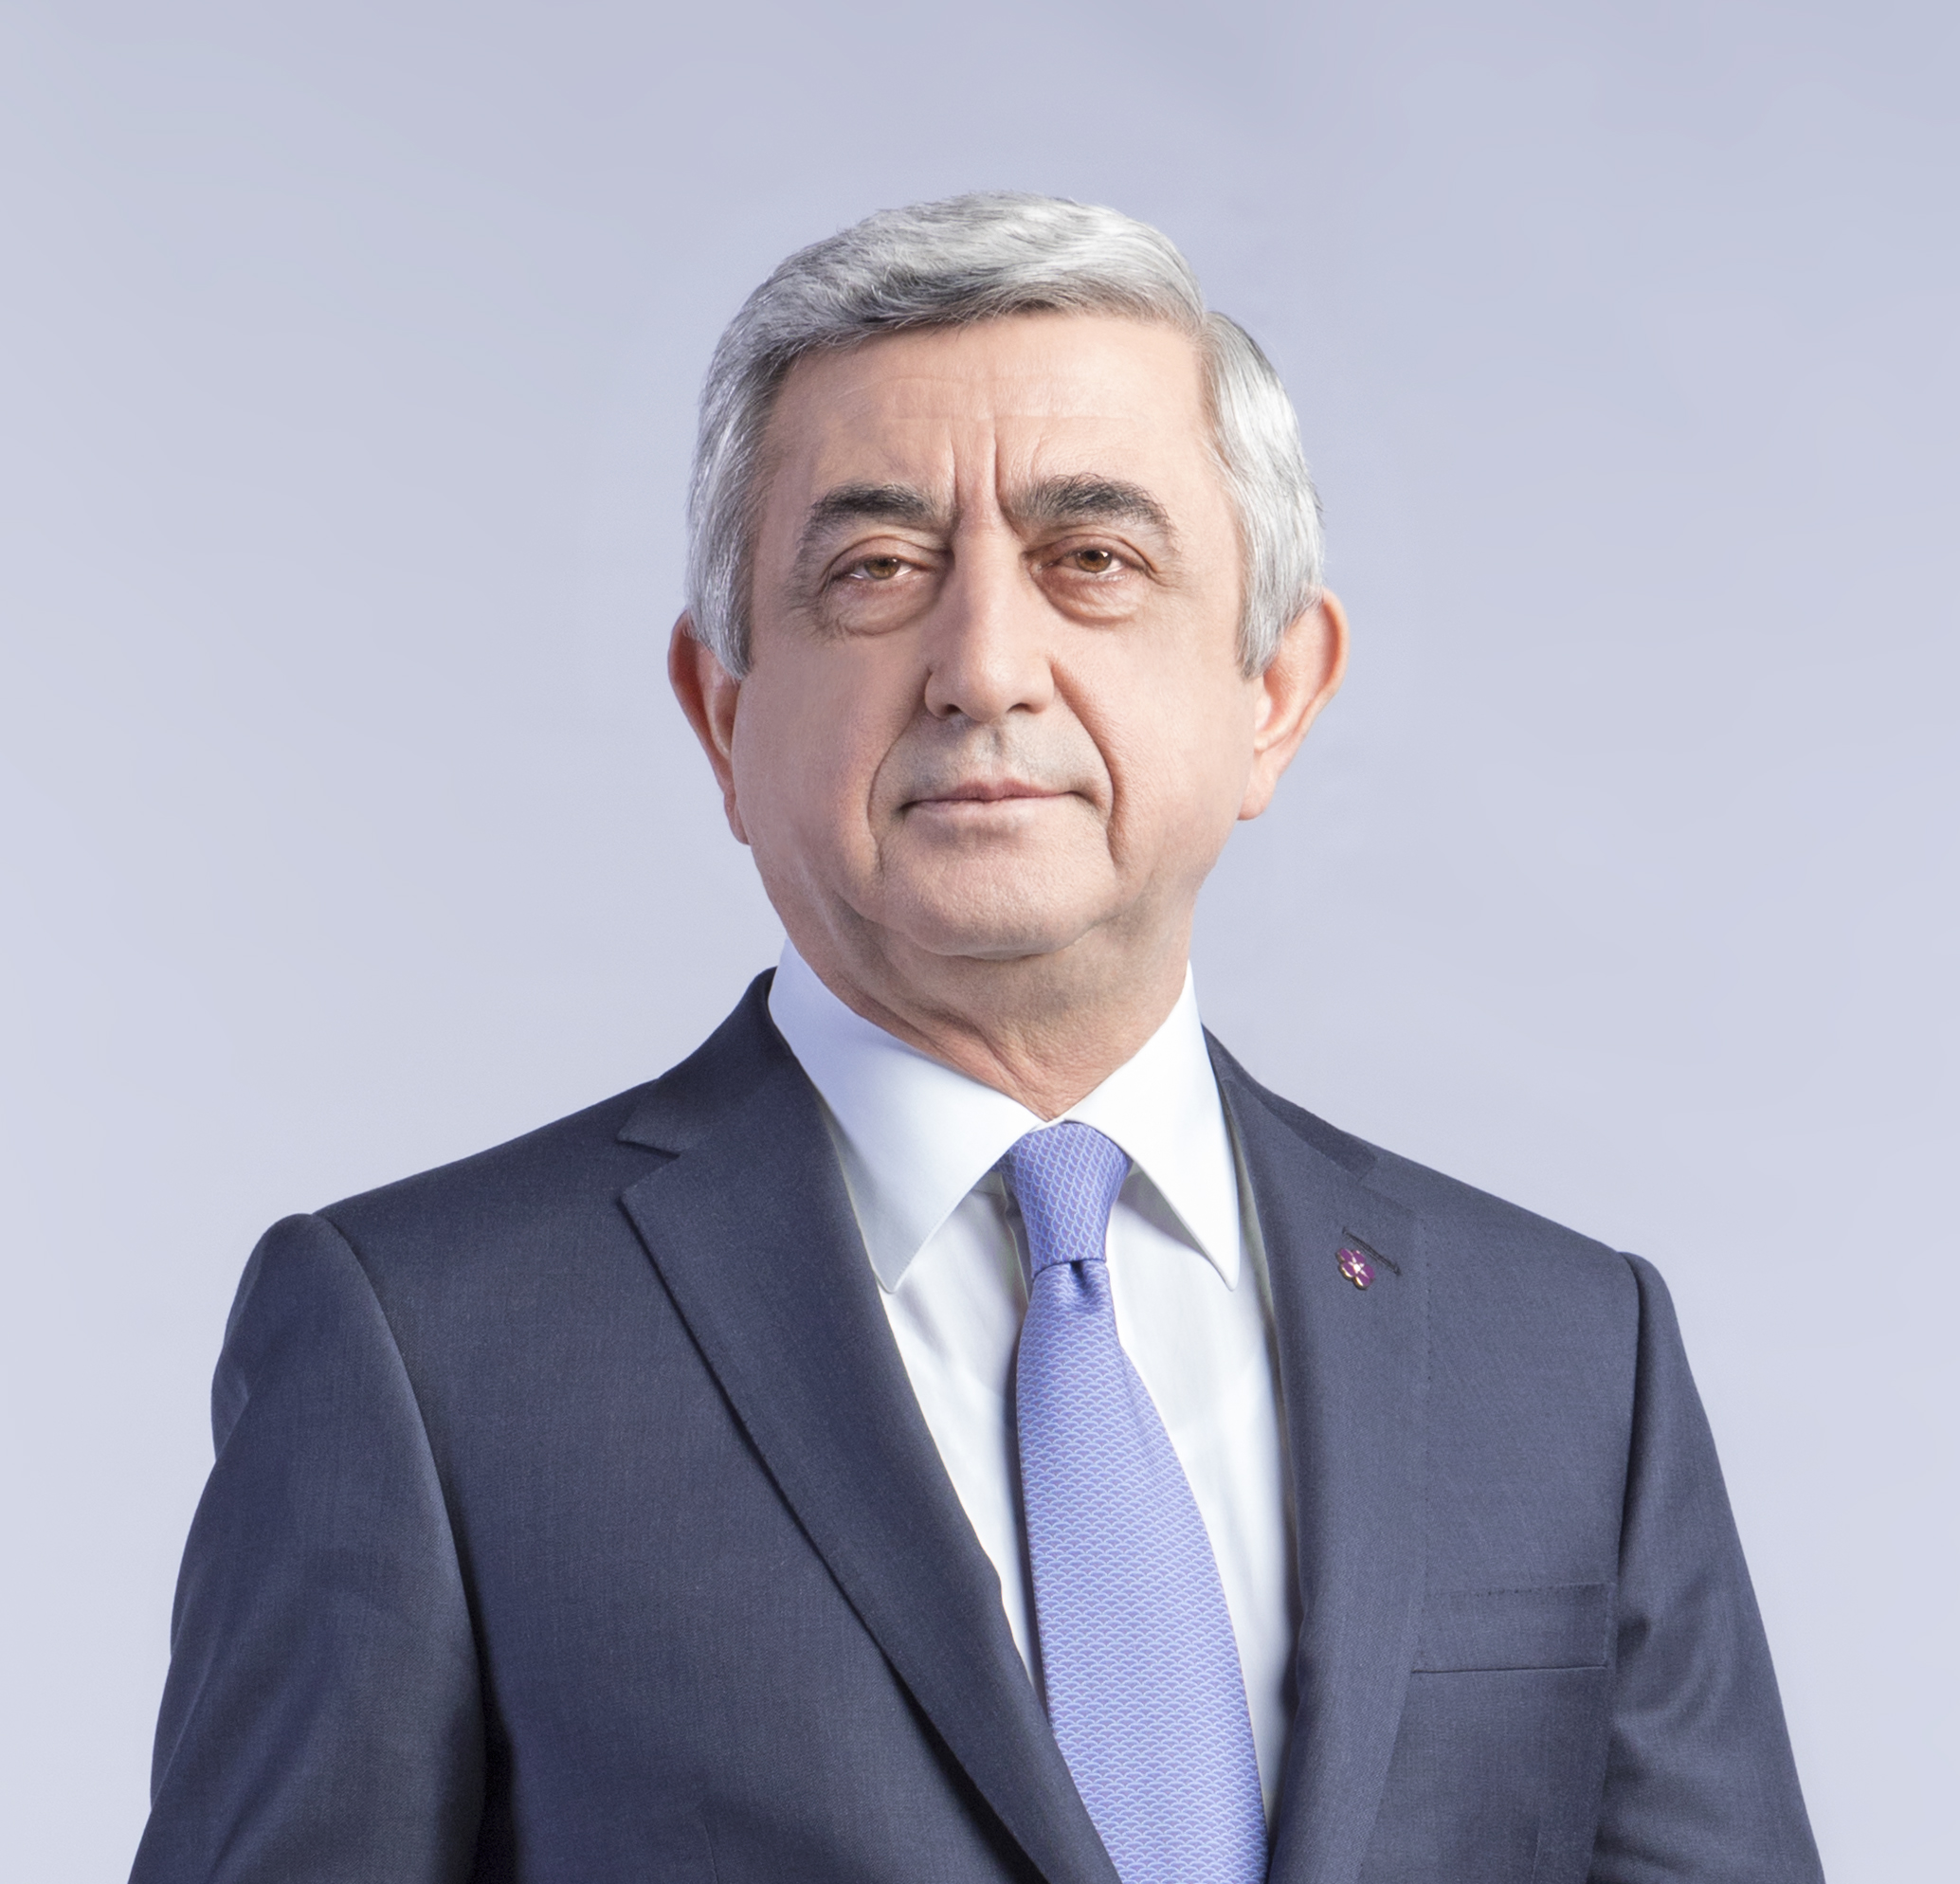 PM Karen Karapetyan has no reason to resign, President Sargsyan says